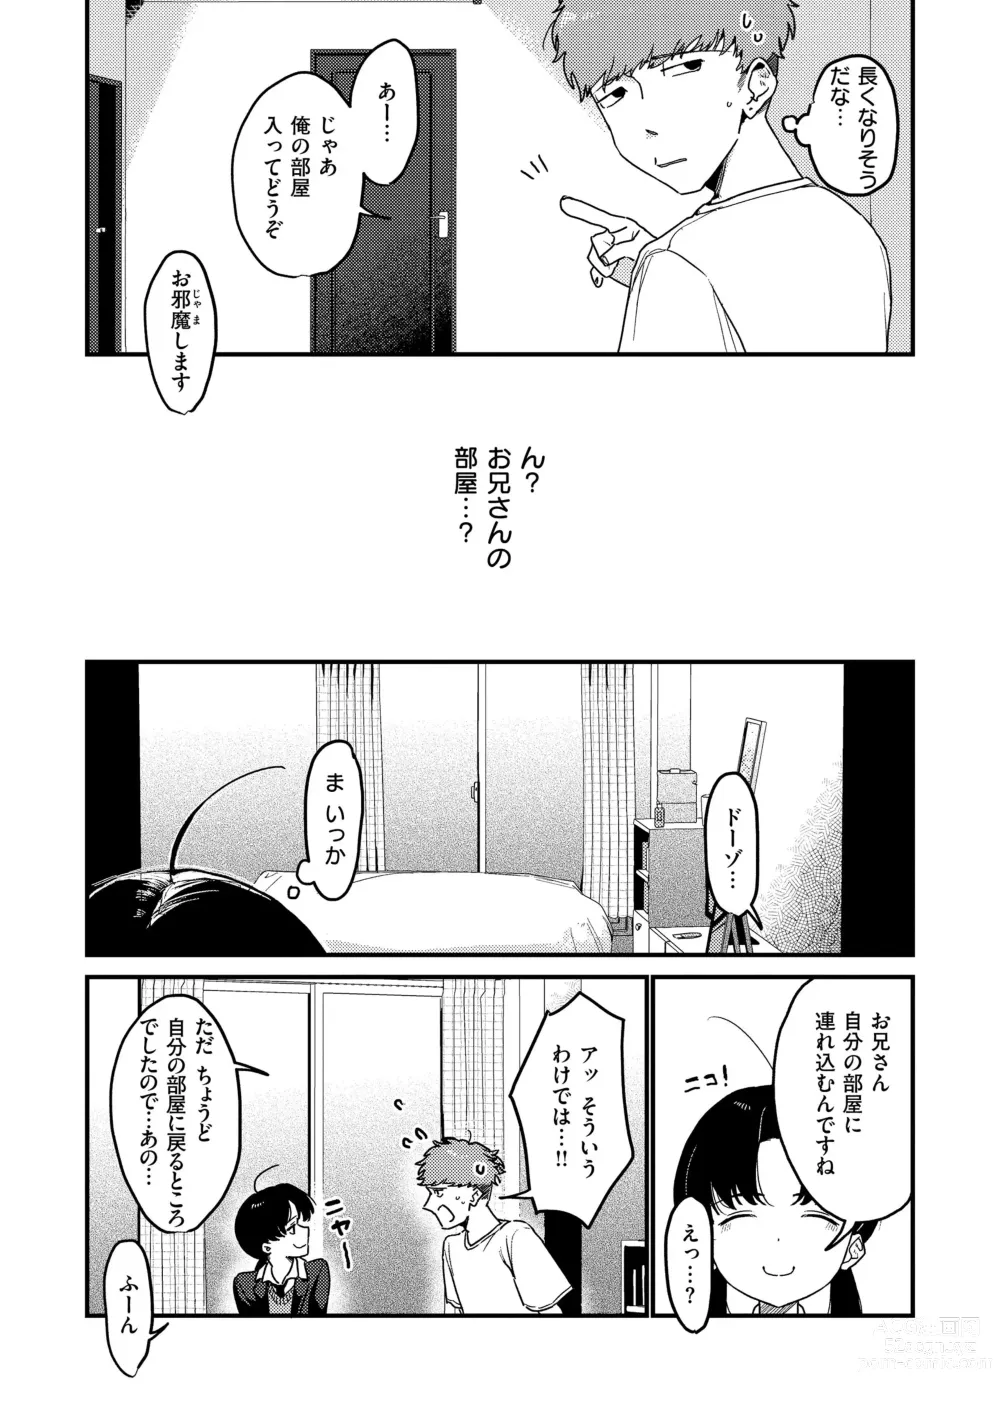 Page 11 of manga Wakarasete. - Show me reality.